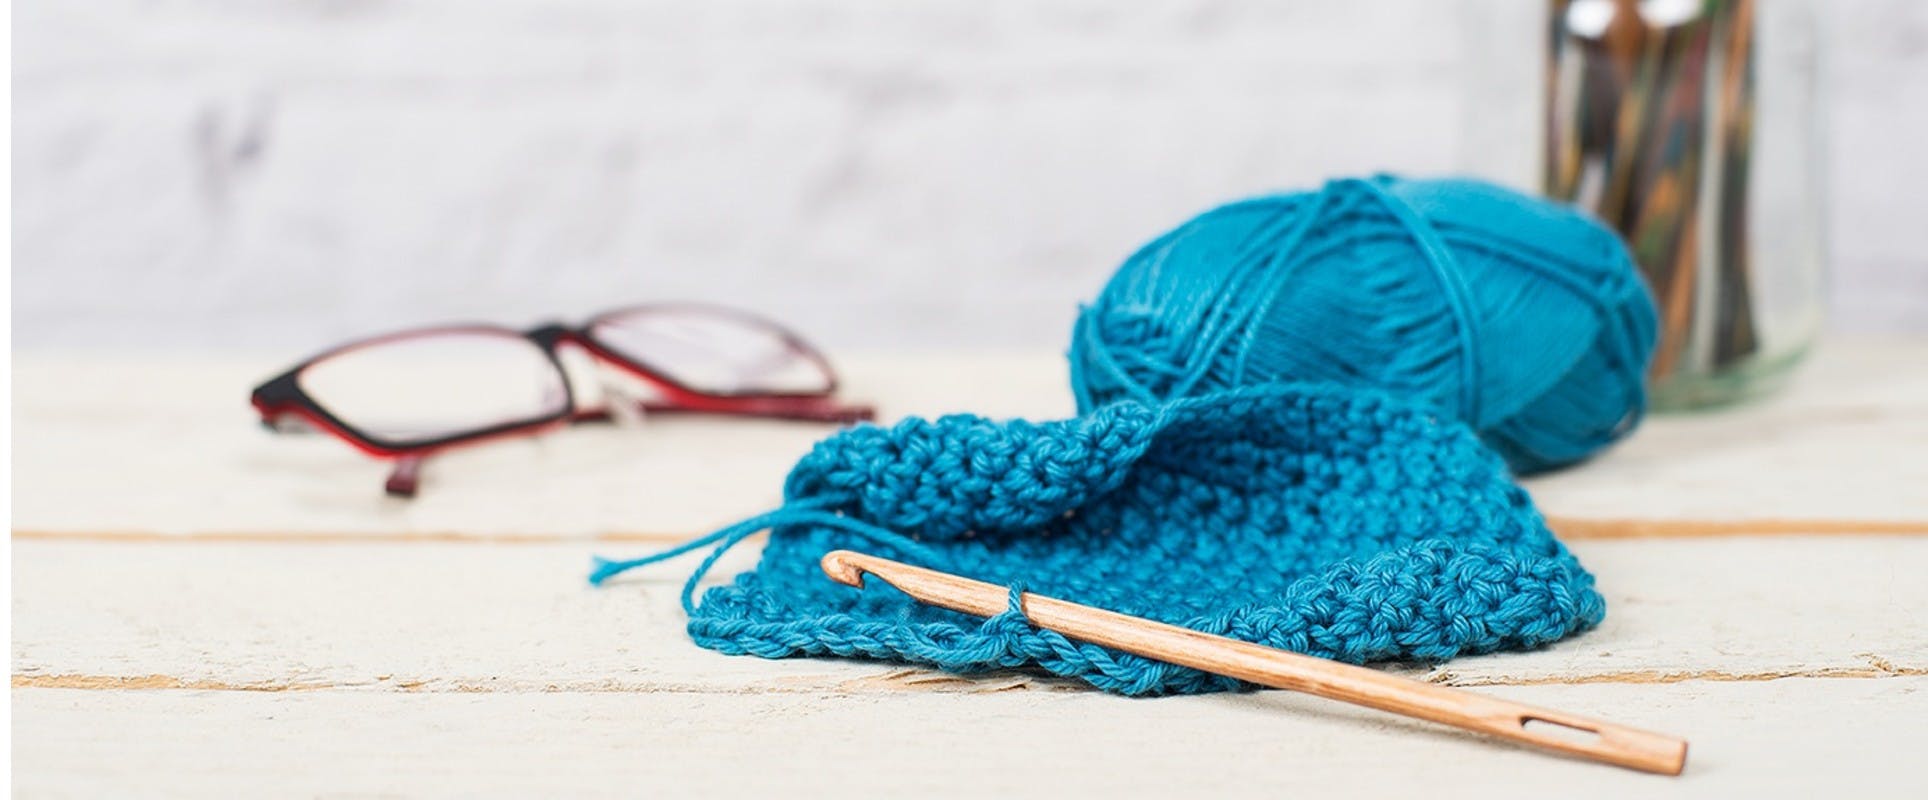 The best knitting needles for beginners - The definite guide 2020